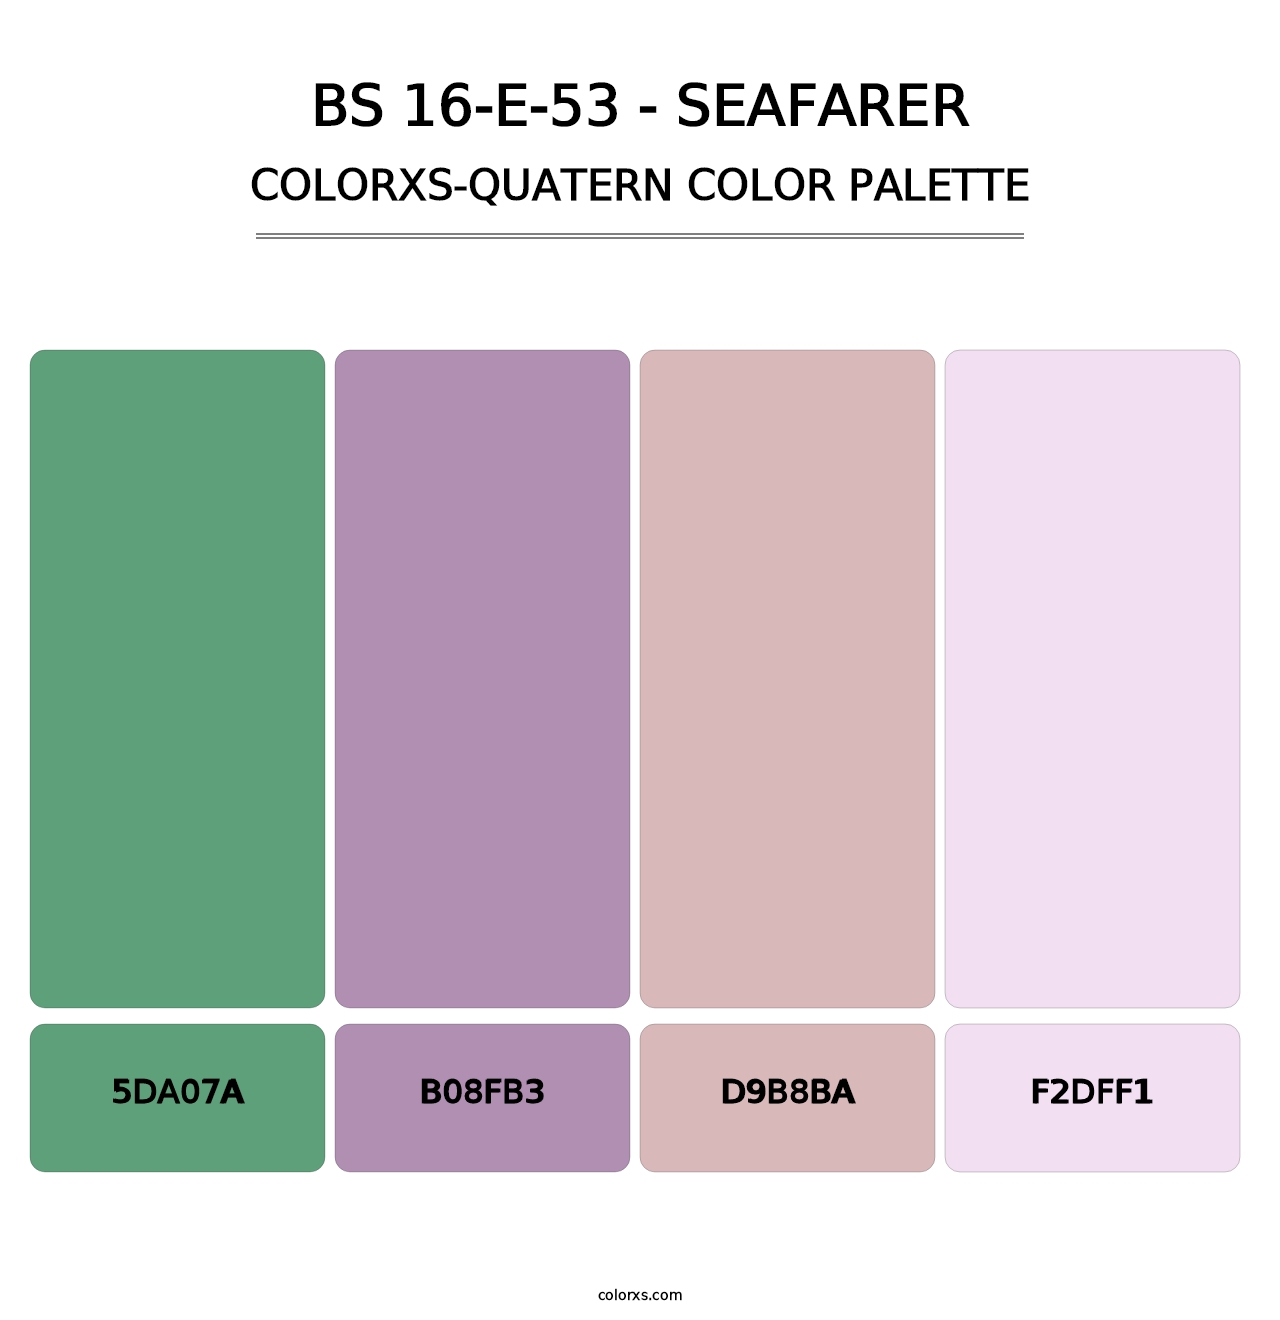 BS 16-E-53 - Seafarer - Colorxs Quatern Palette